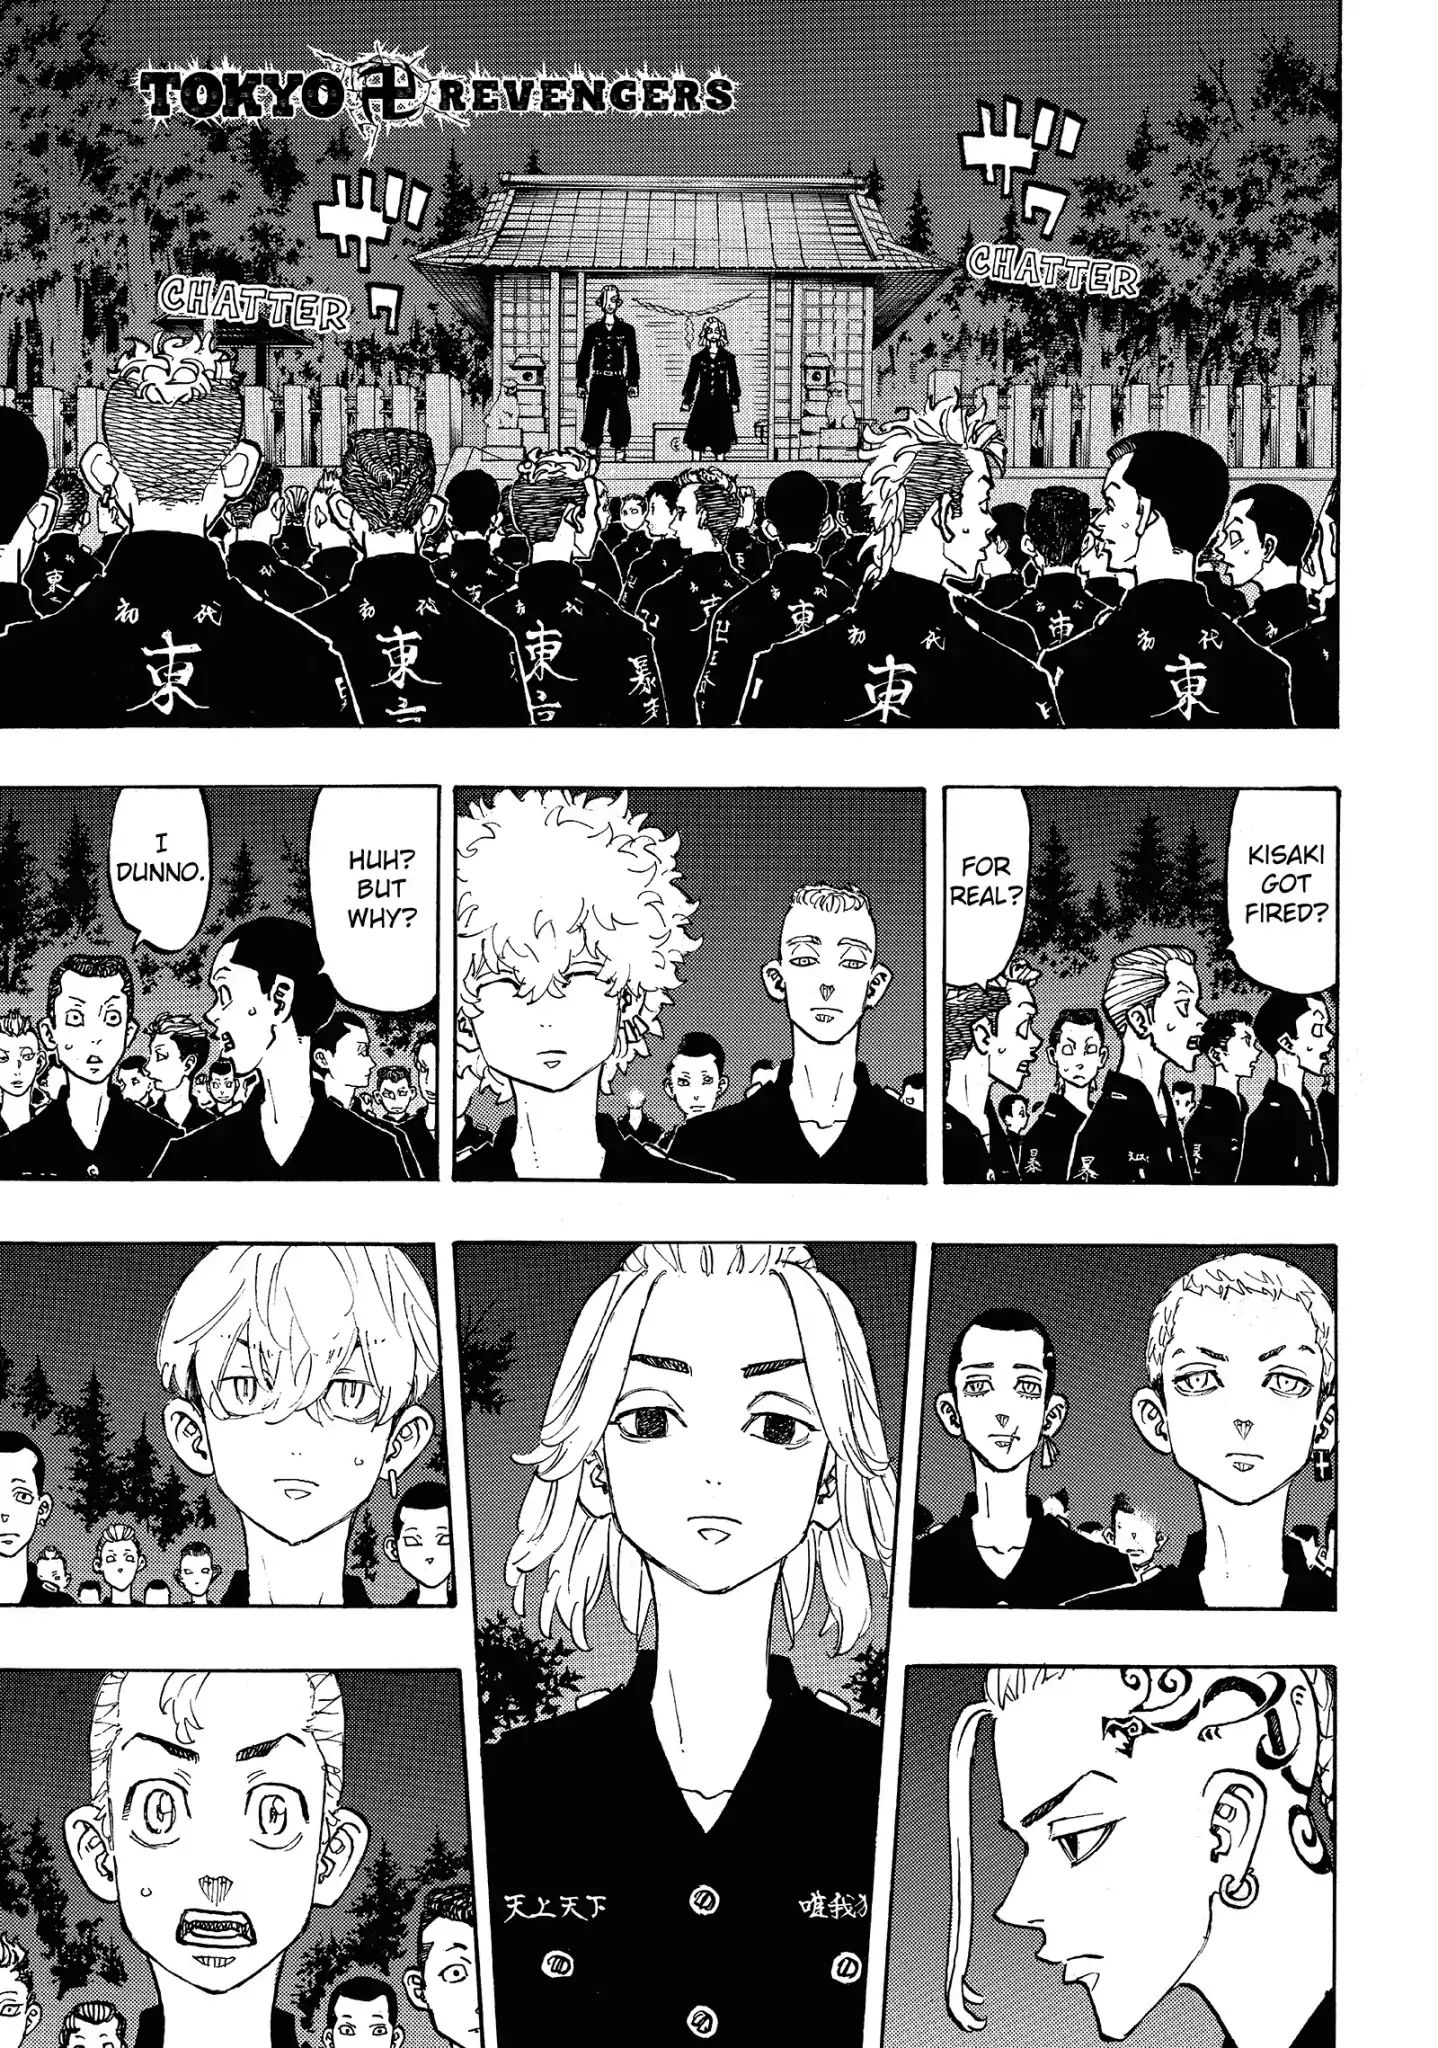 Baca manga tokyo revengers chapter sub indo